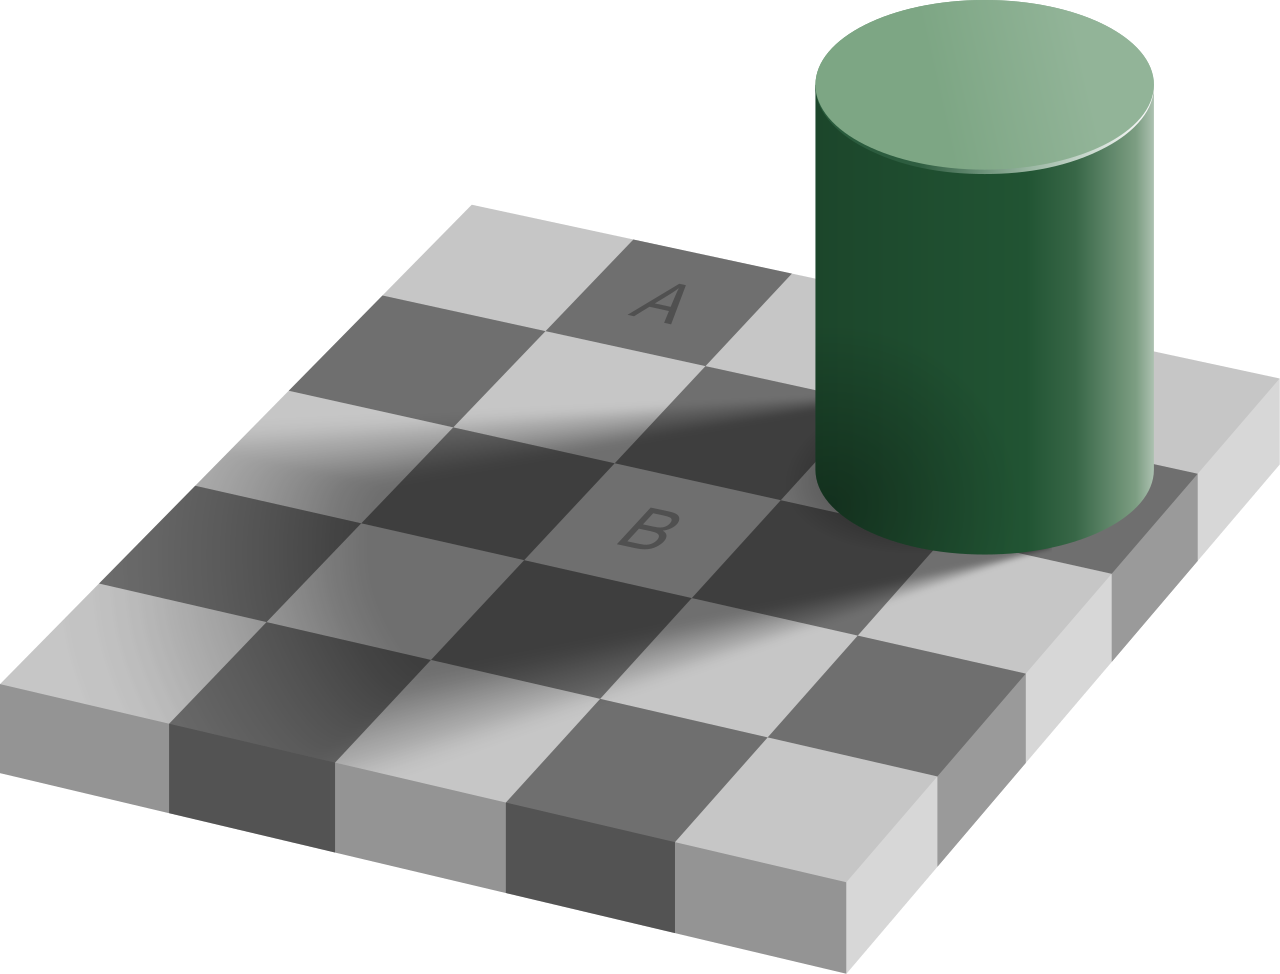 The checker shadow optical illusion